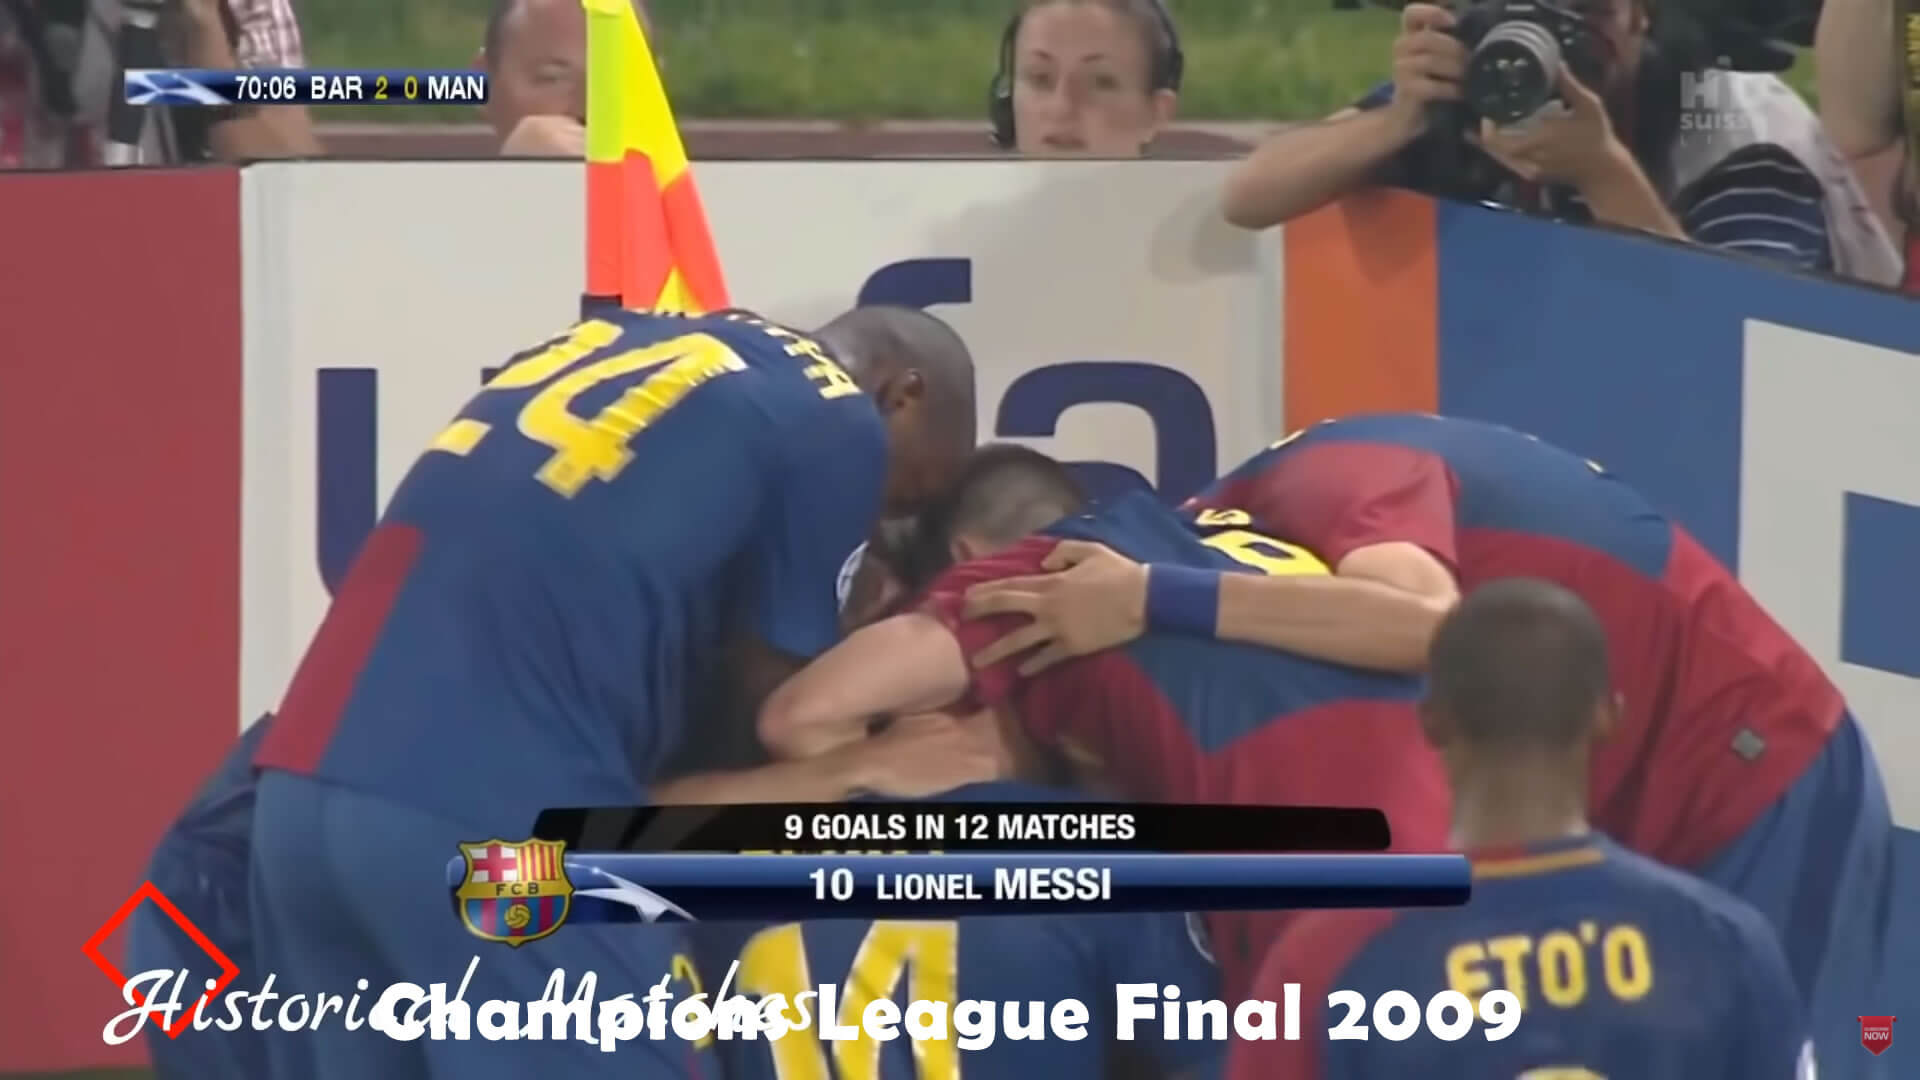 UEFA Champions League Final 2009 Messi Goal